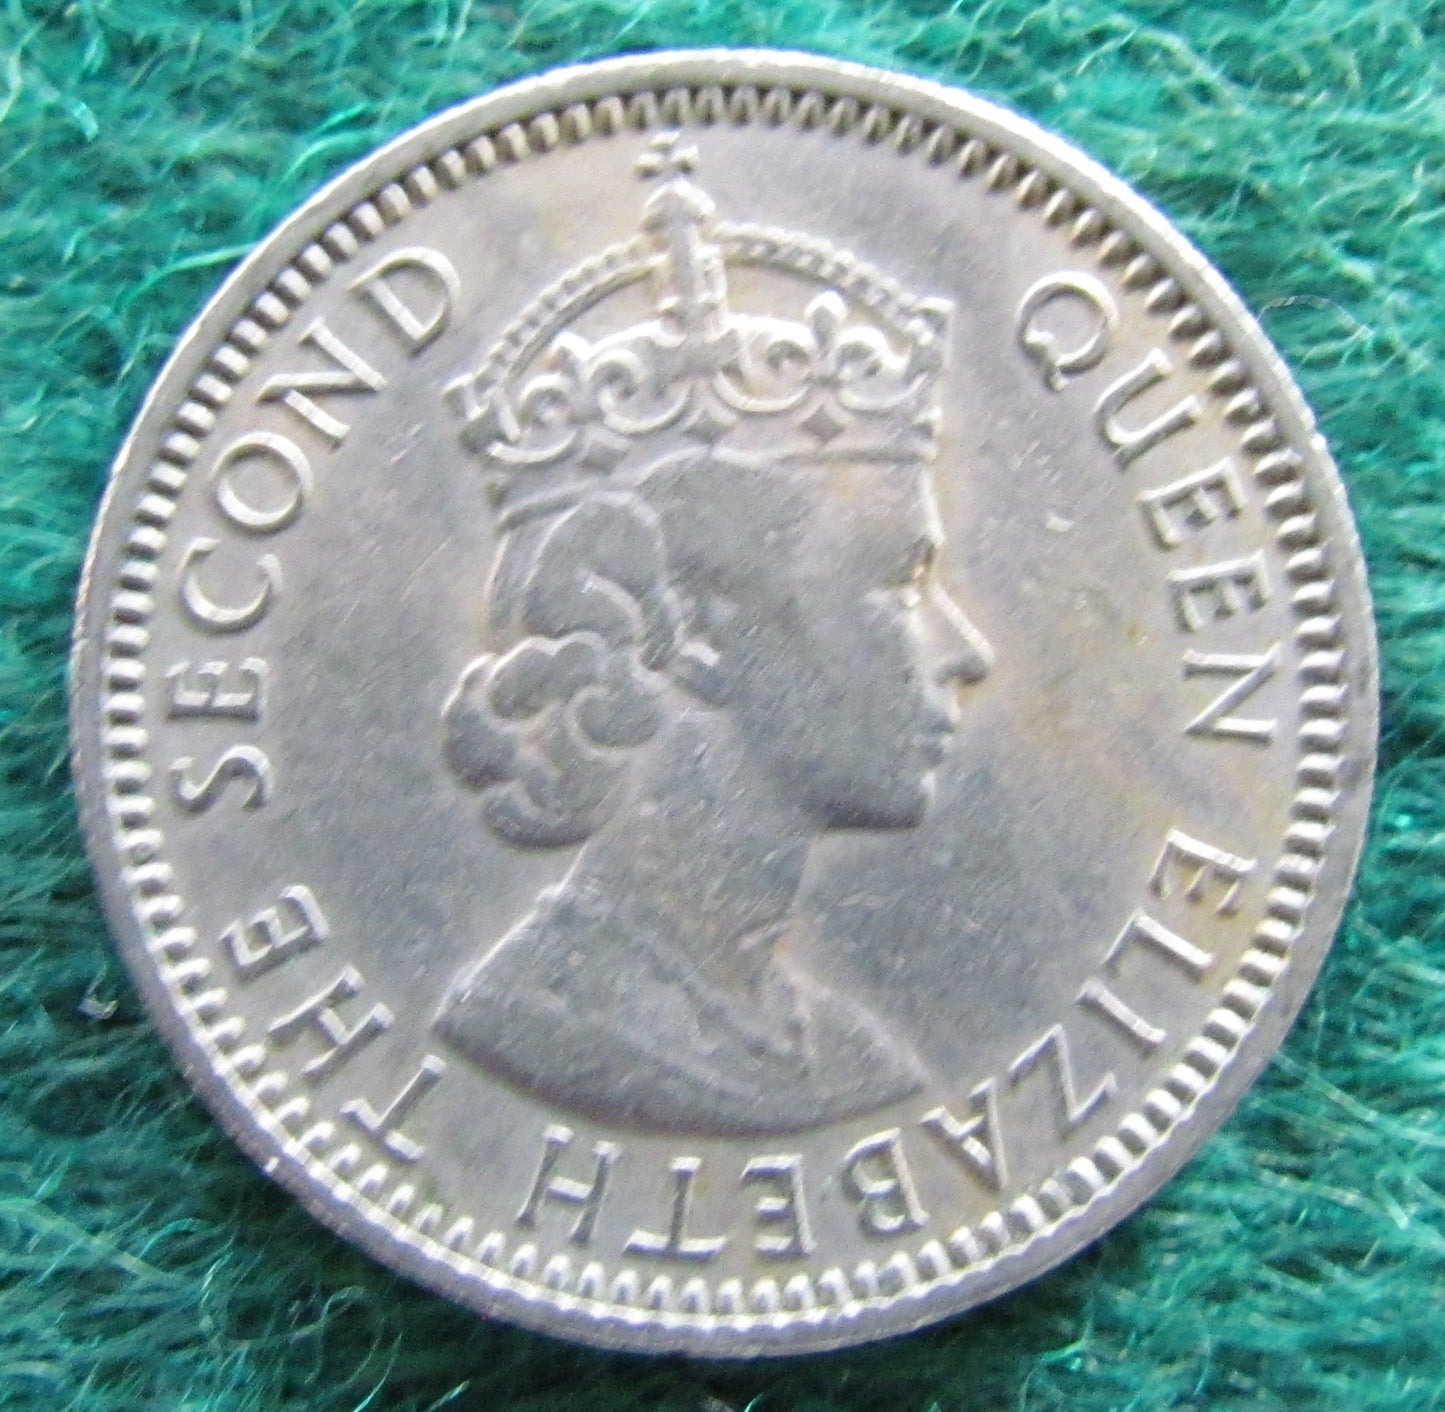 Malaya & British Borneo 1958 10 Cent Queen Elizabeth II Coin